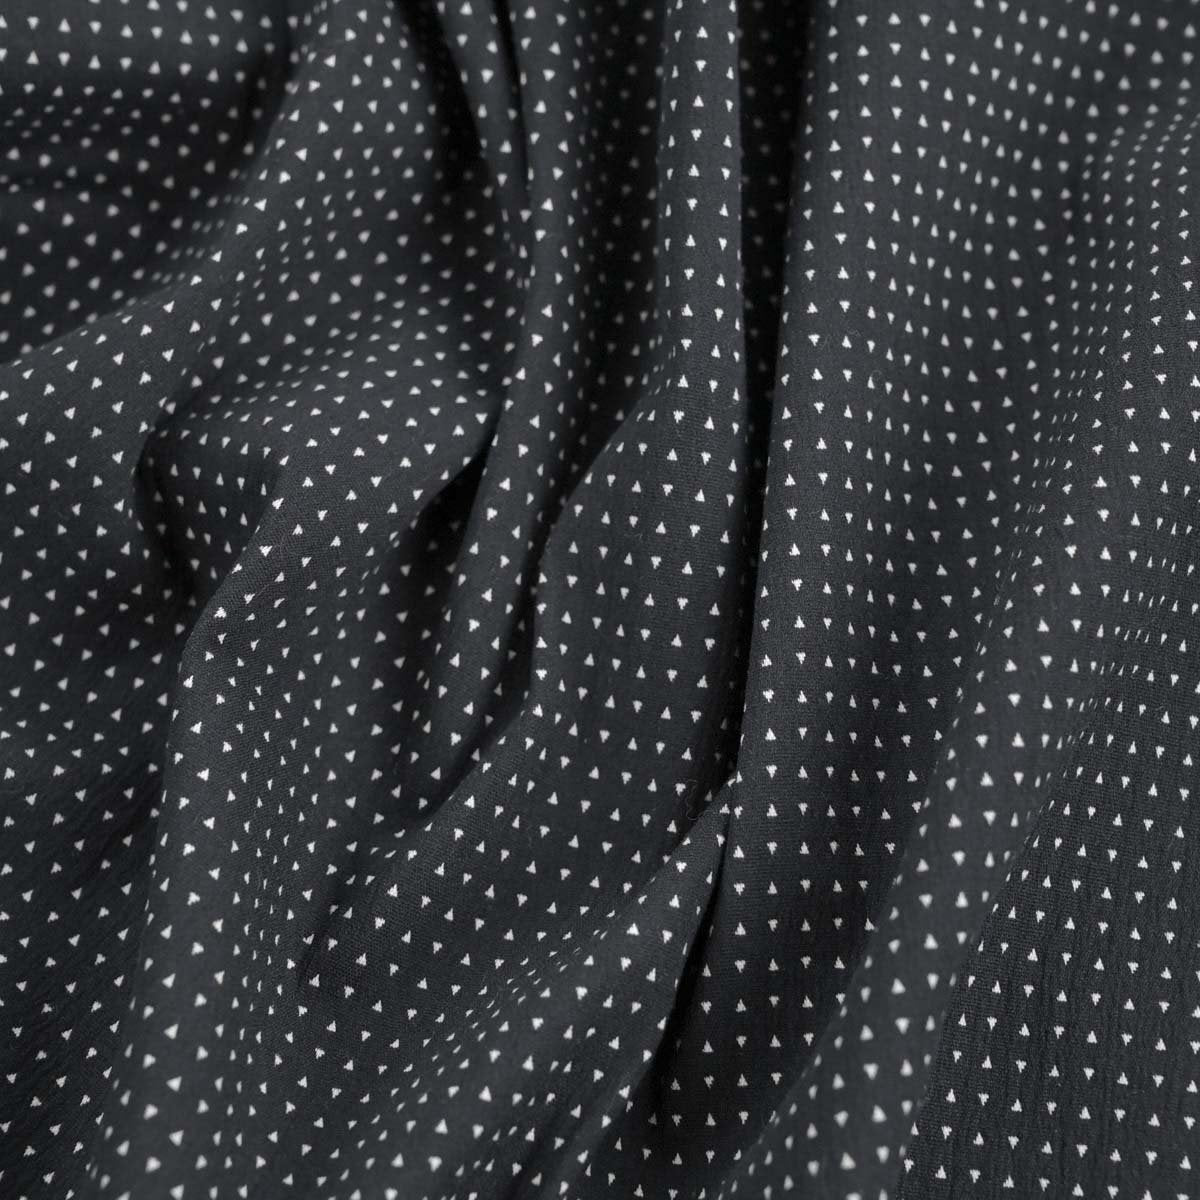 Black Geometric Jacquard Fabric 2162